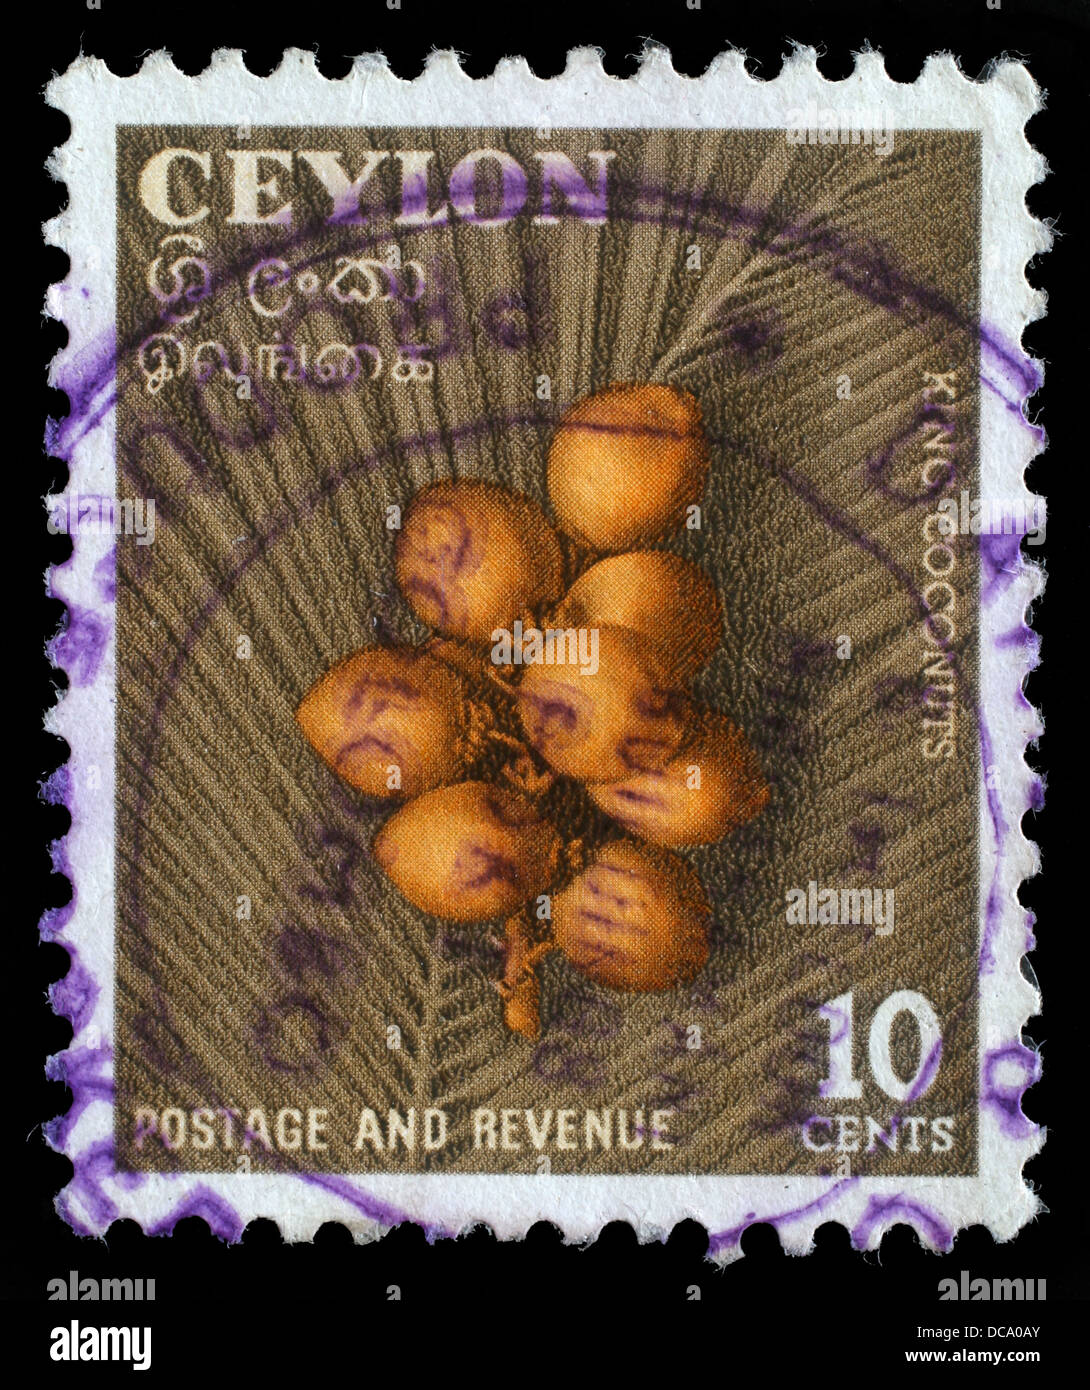 CEYLON - CIRCA 1957: A stamp printed in Ceylon (now Sri Lanka) shows image of king coconuts, series, circa 1957 Stock Photo